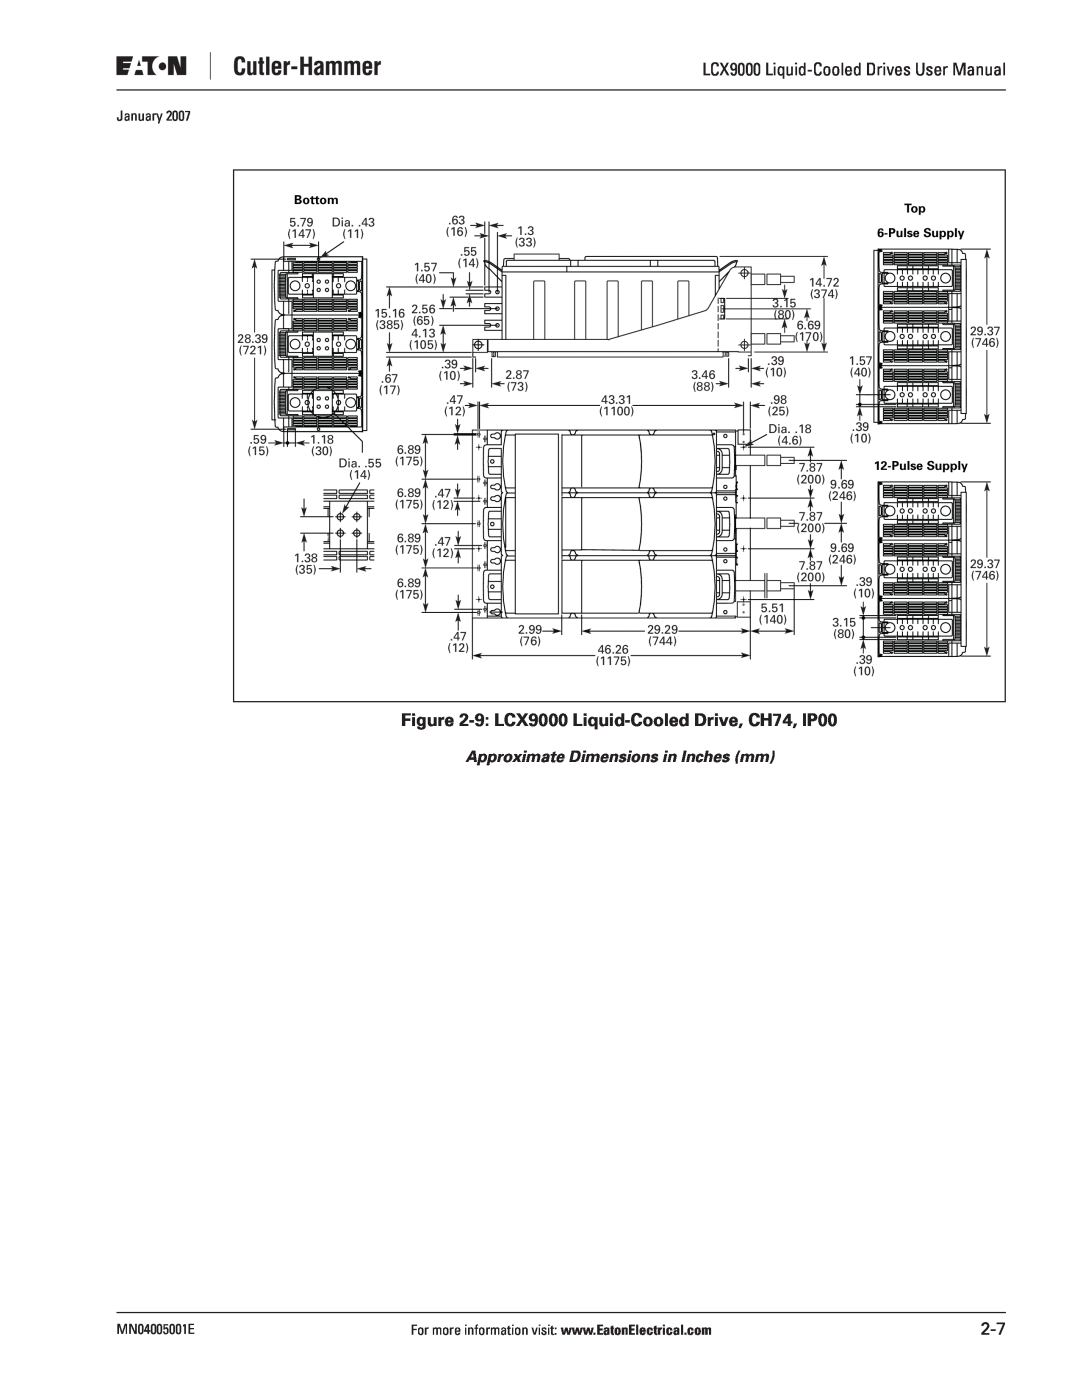 J. T. Eaton user manual 9 LCX9000 Liquid-Cooled Drive, CH74, IP00, January, MN04005001E, Bottom, Pulse Supply 